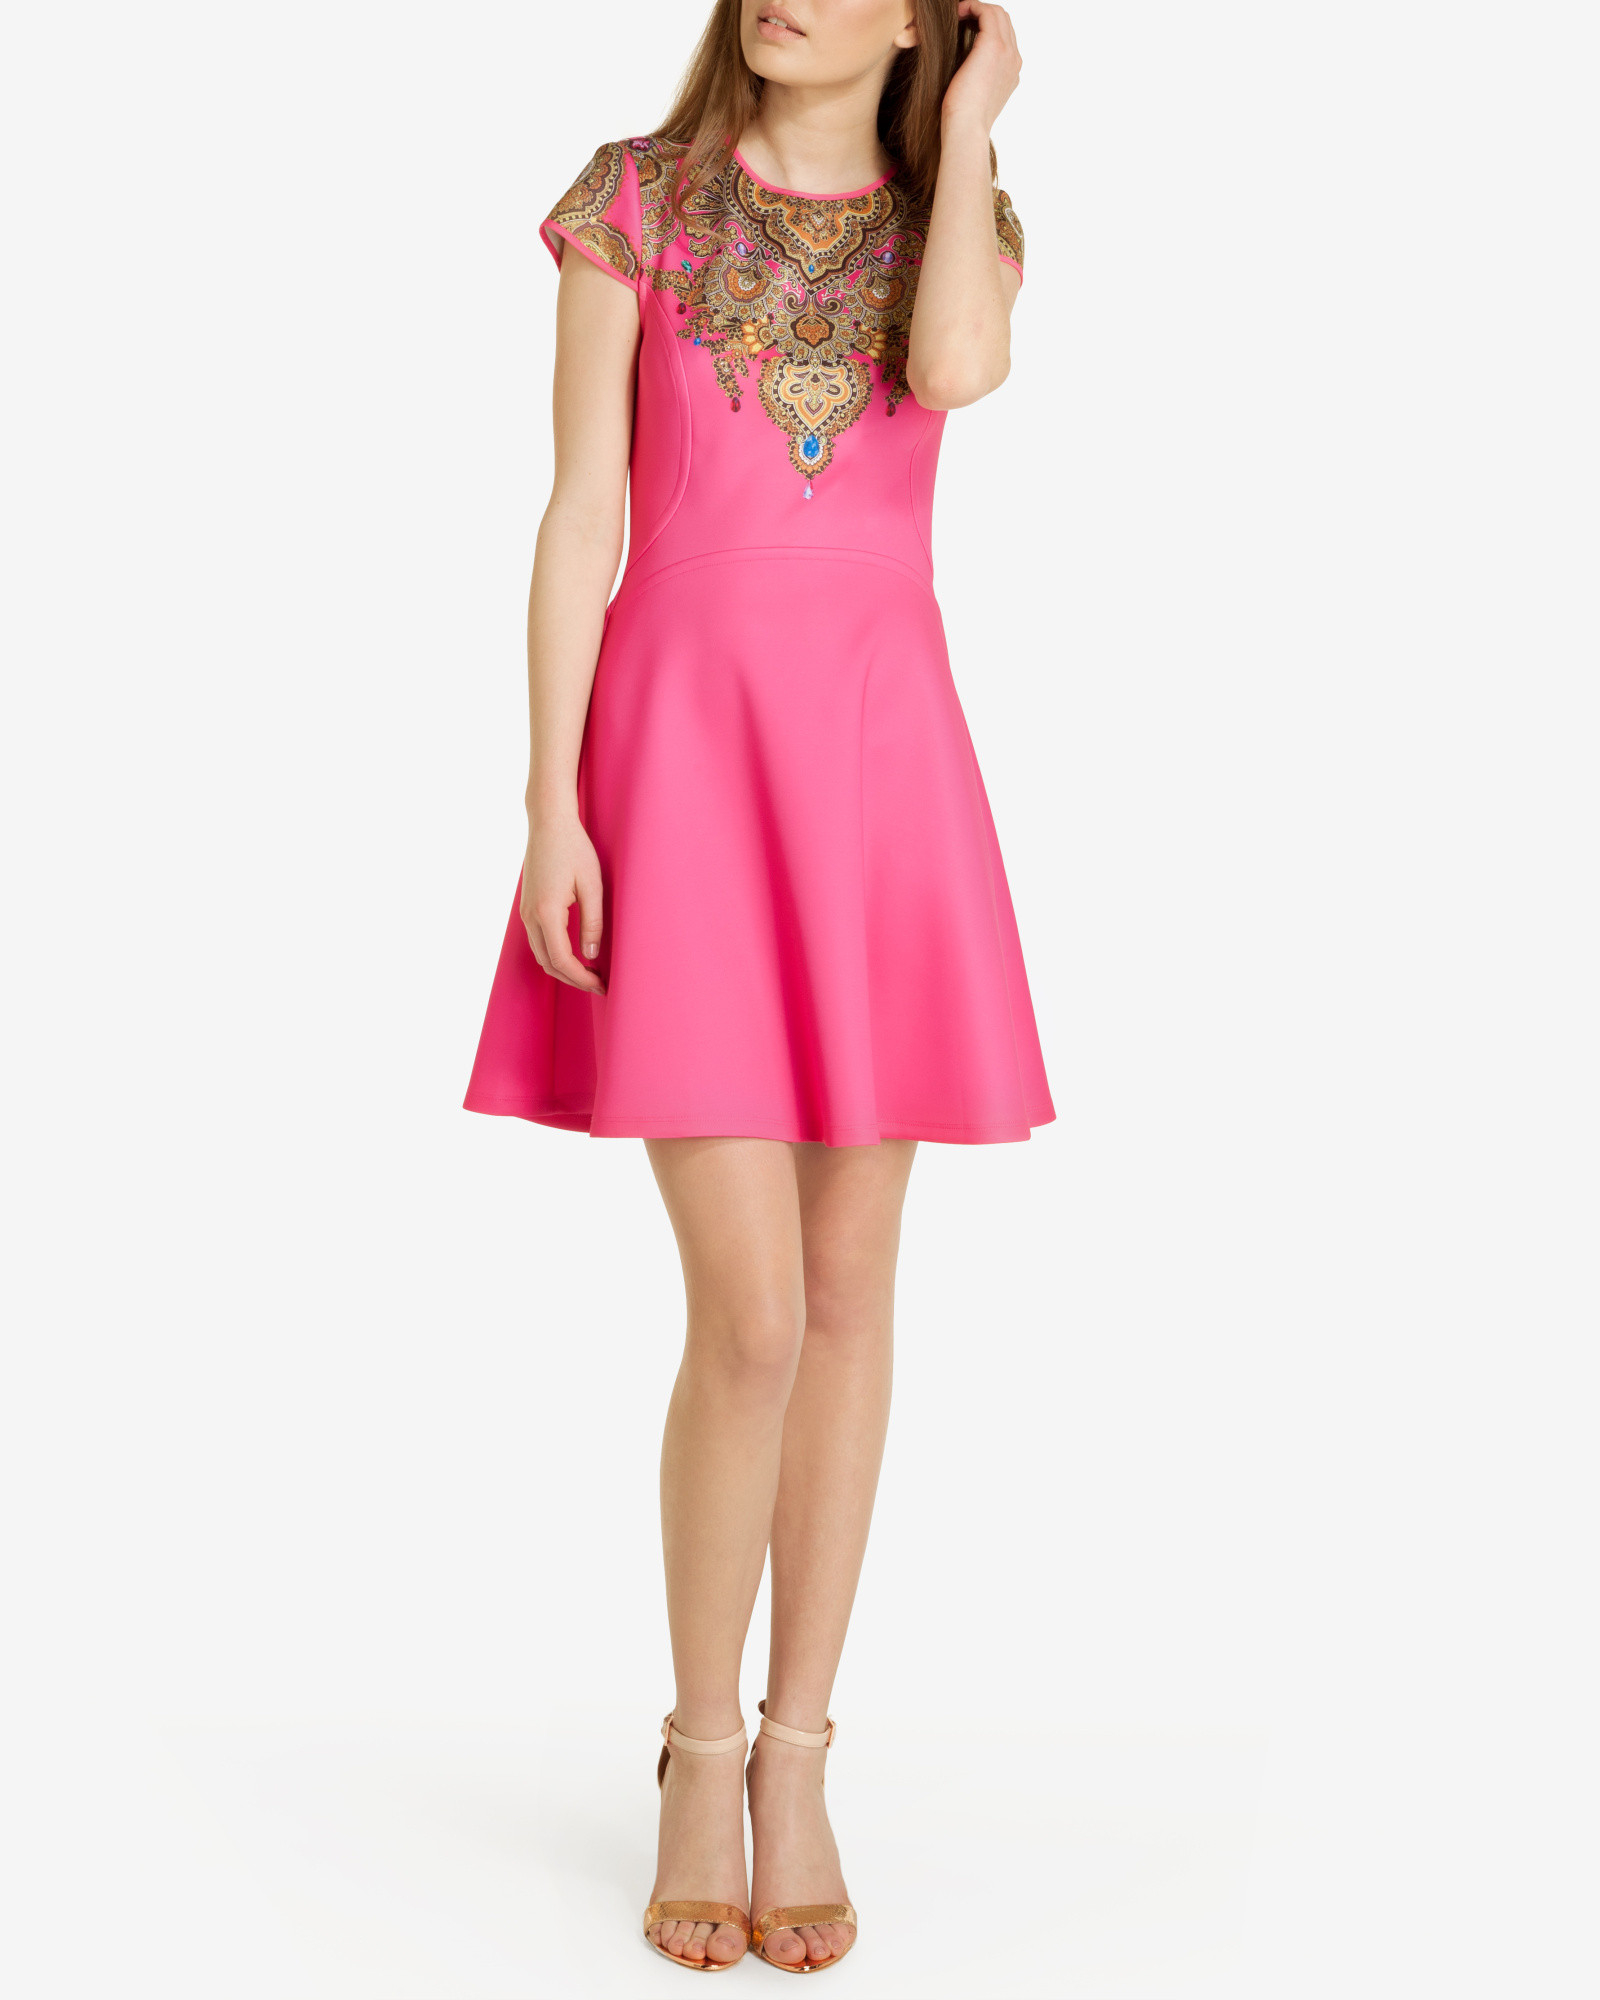 Ted baker Marliza Jewel Neoprene Skater Dress in Pink (Bright Pink) | Lyst